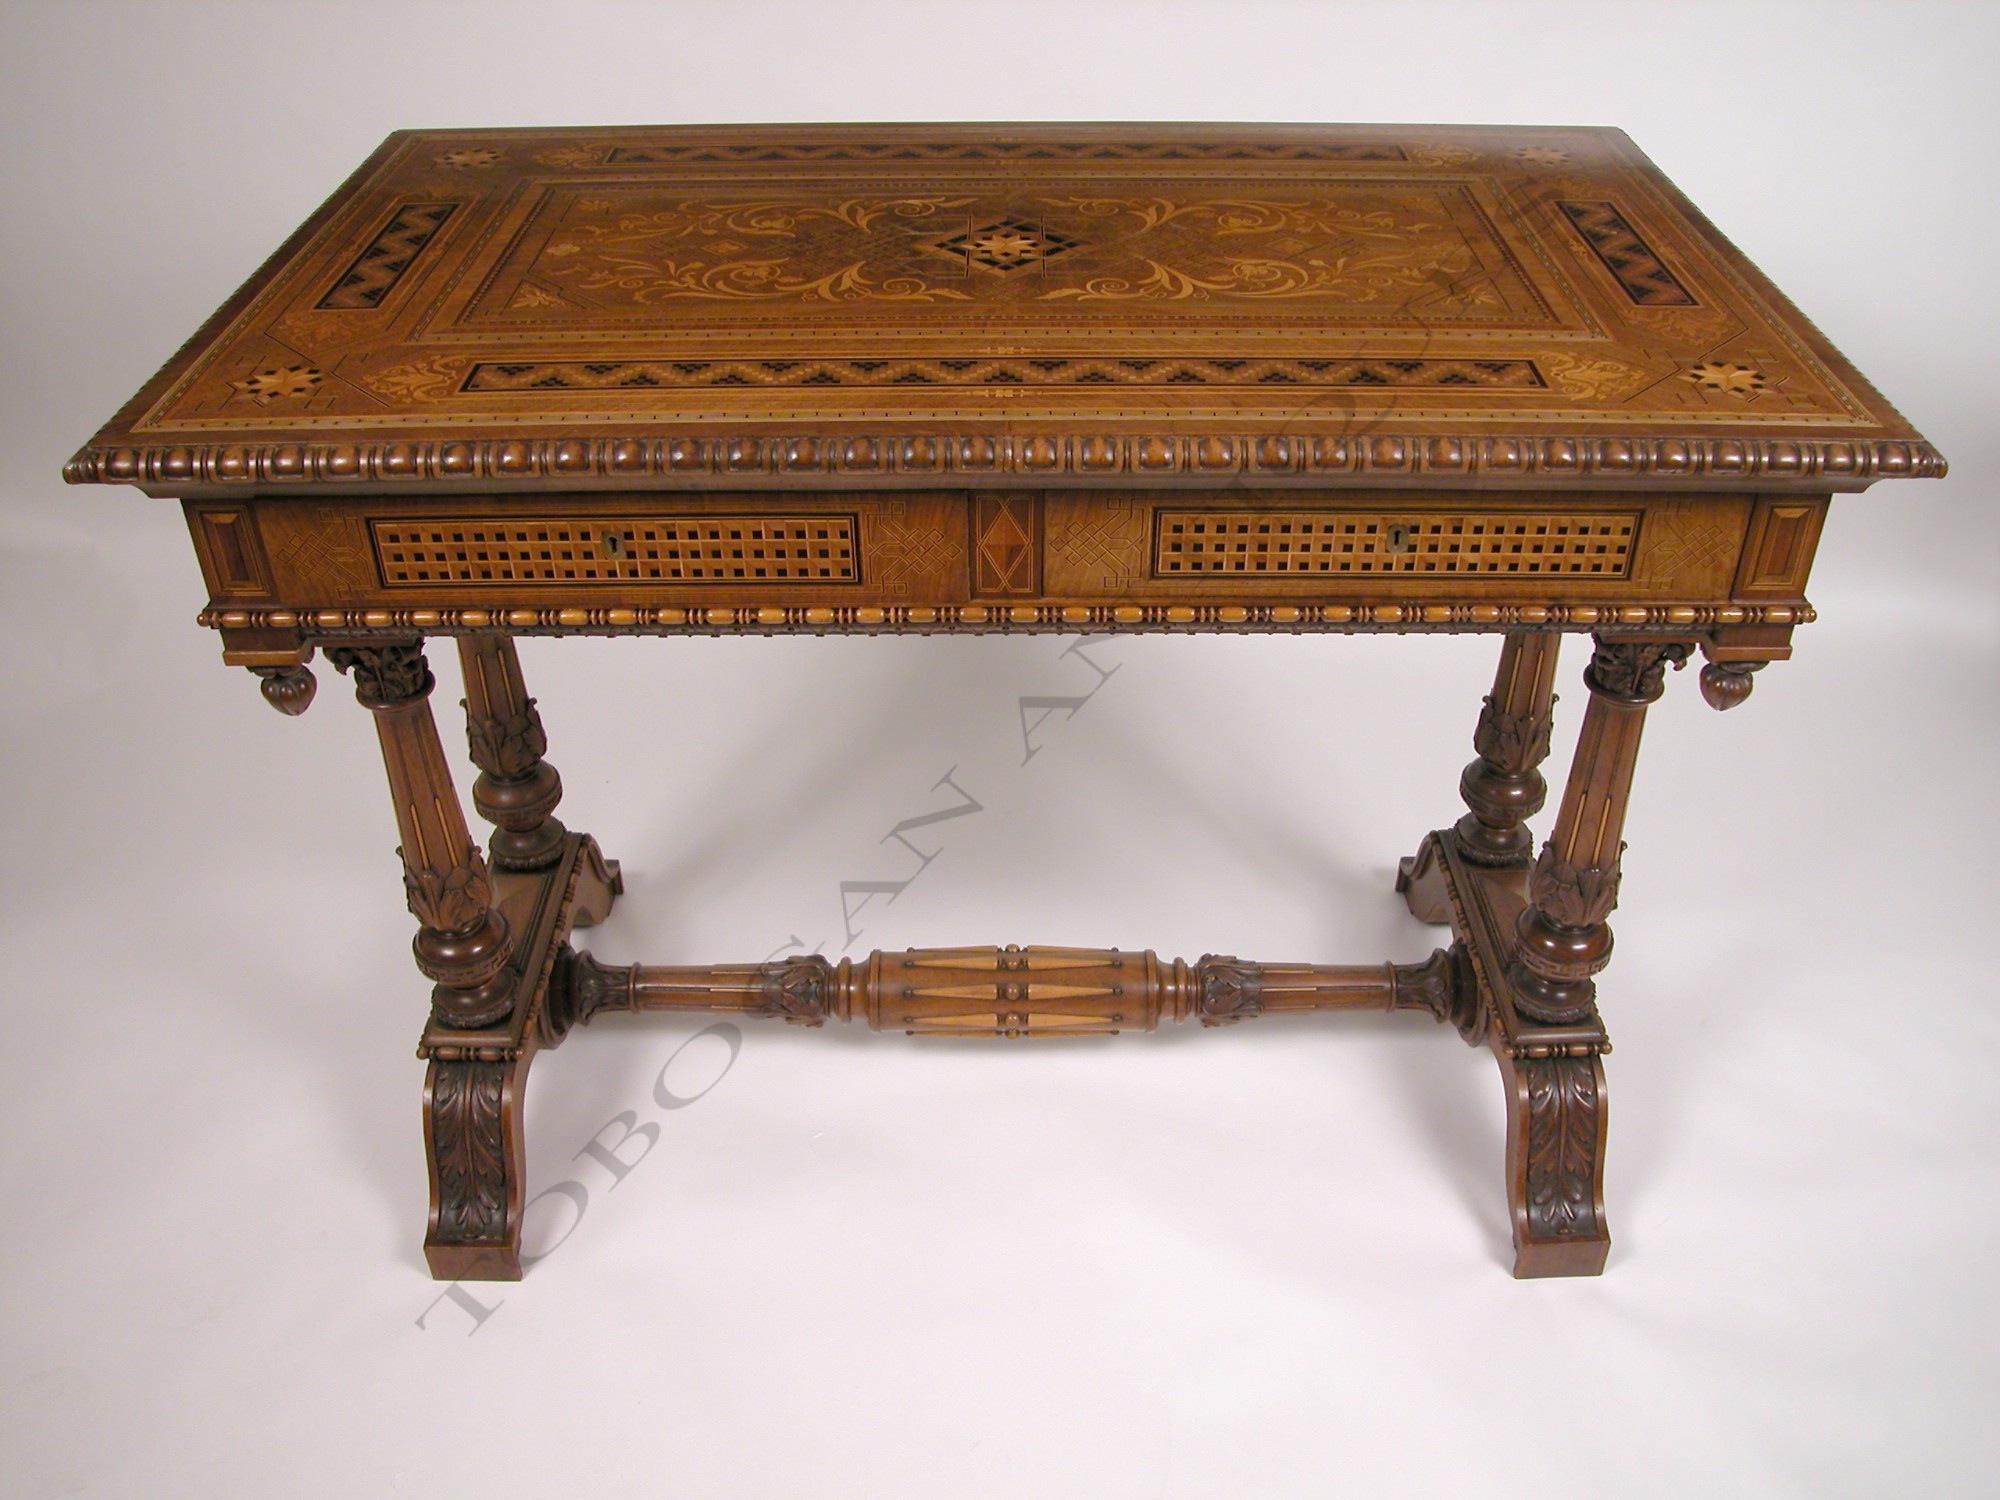 Cortina d’Ampezzo<br />Renaissance style center table